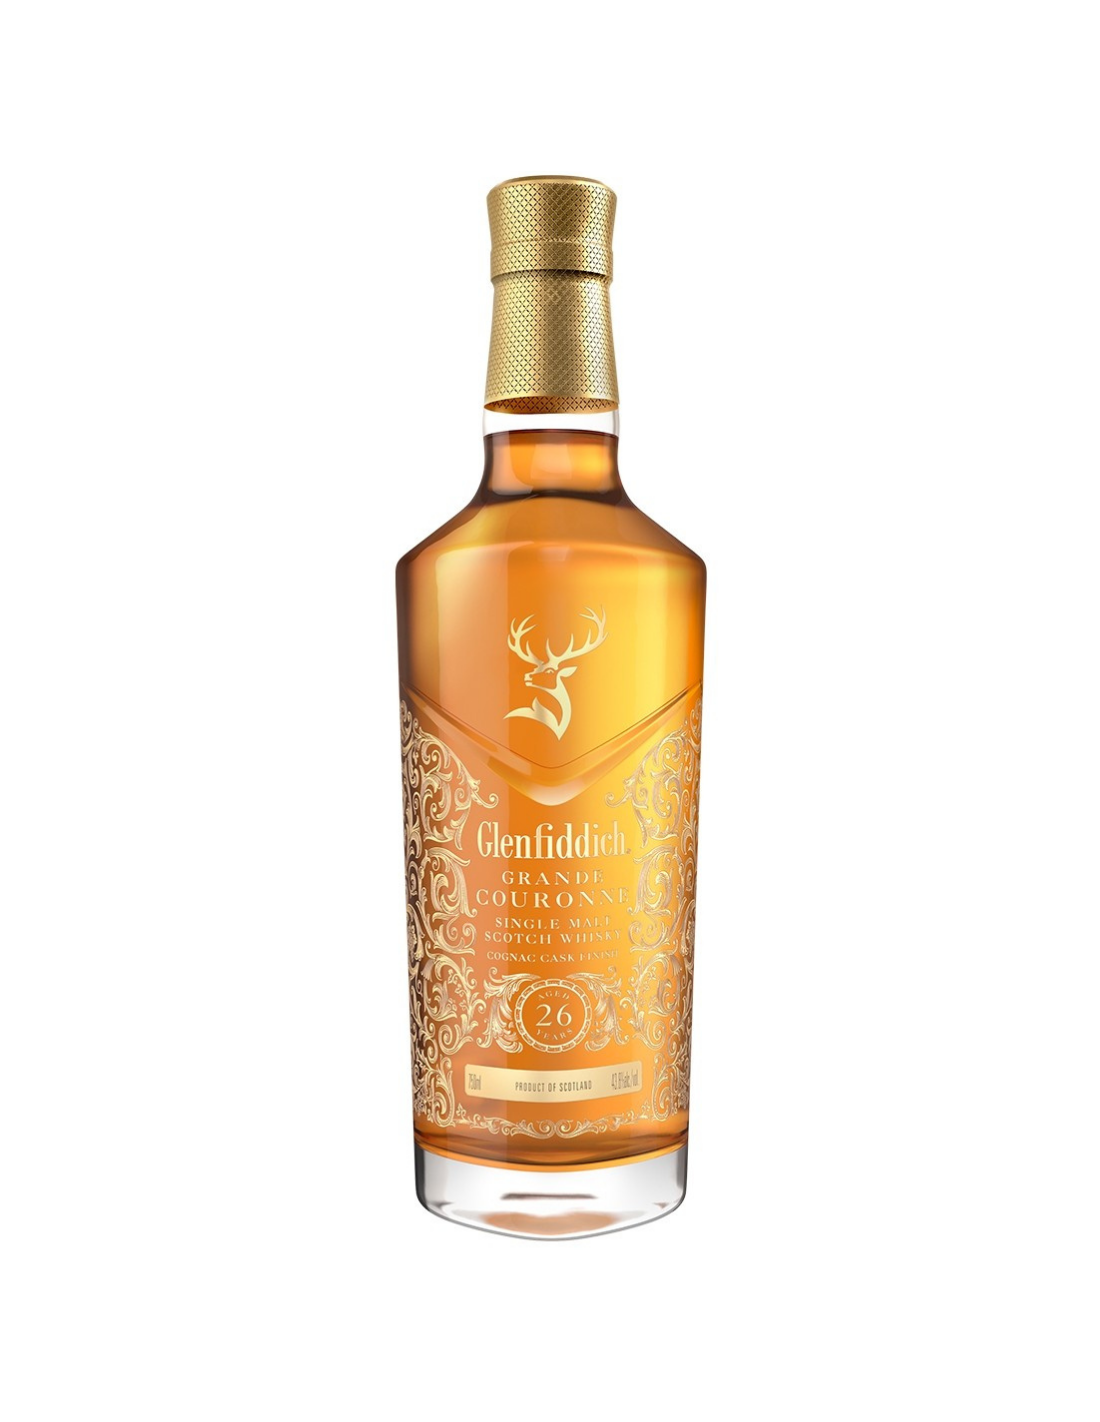 Whisky Glenfiddich 26 Years Grande Couronne, 0.7L, 43.8% alc., Marea Britanie alcooldiscount.ro